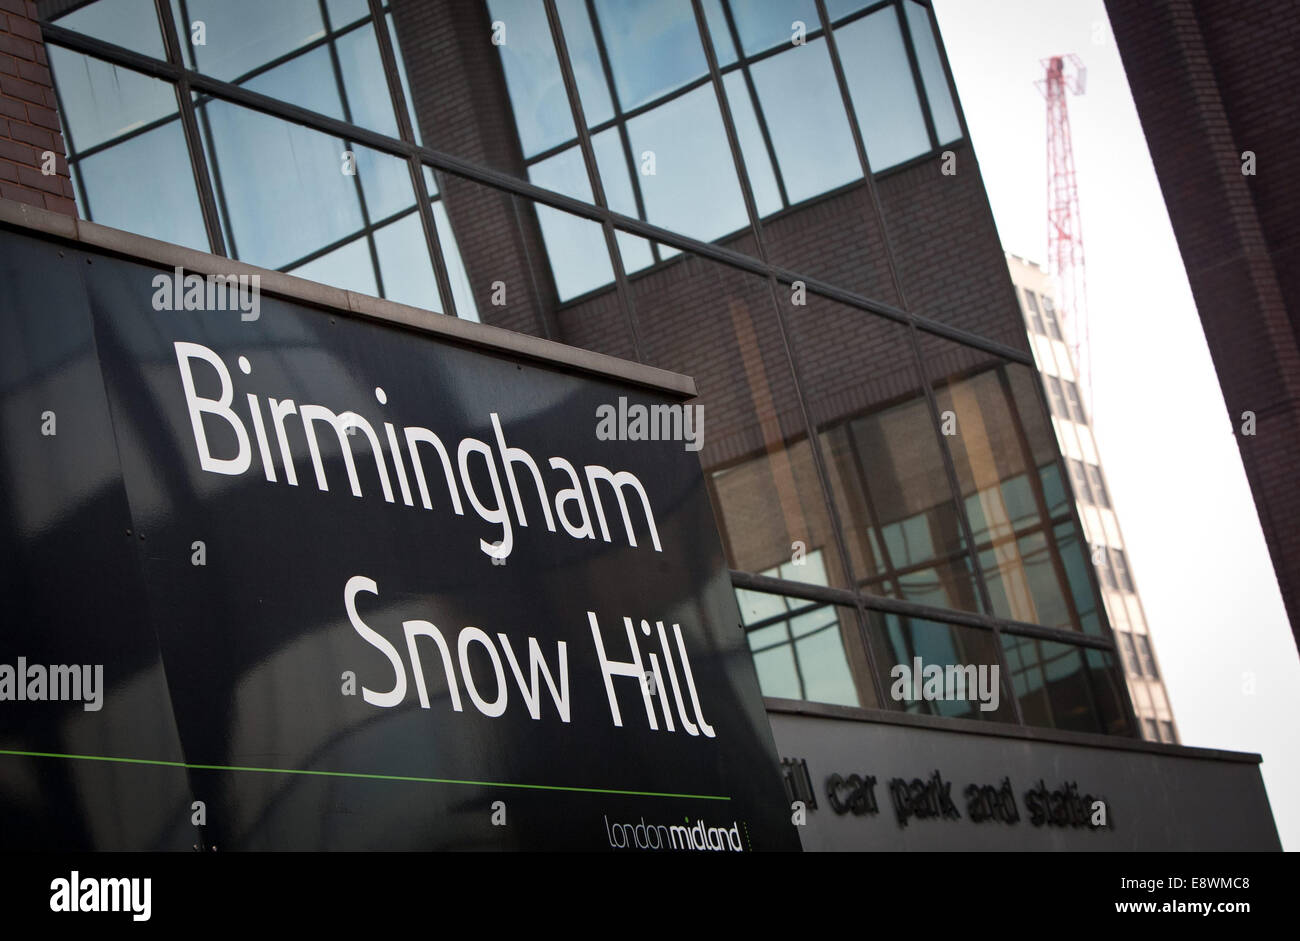 Snow Hill Train Station in Birmingham, West Midlands. Stock Photo